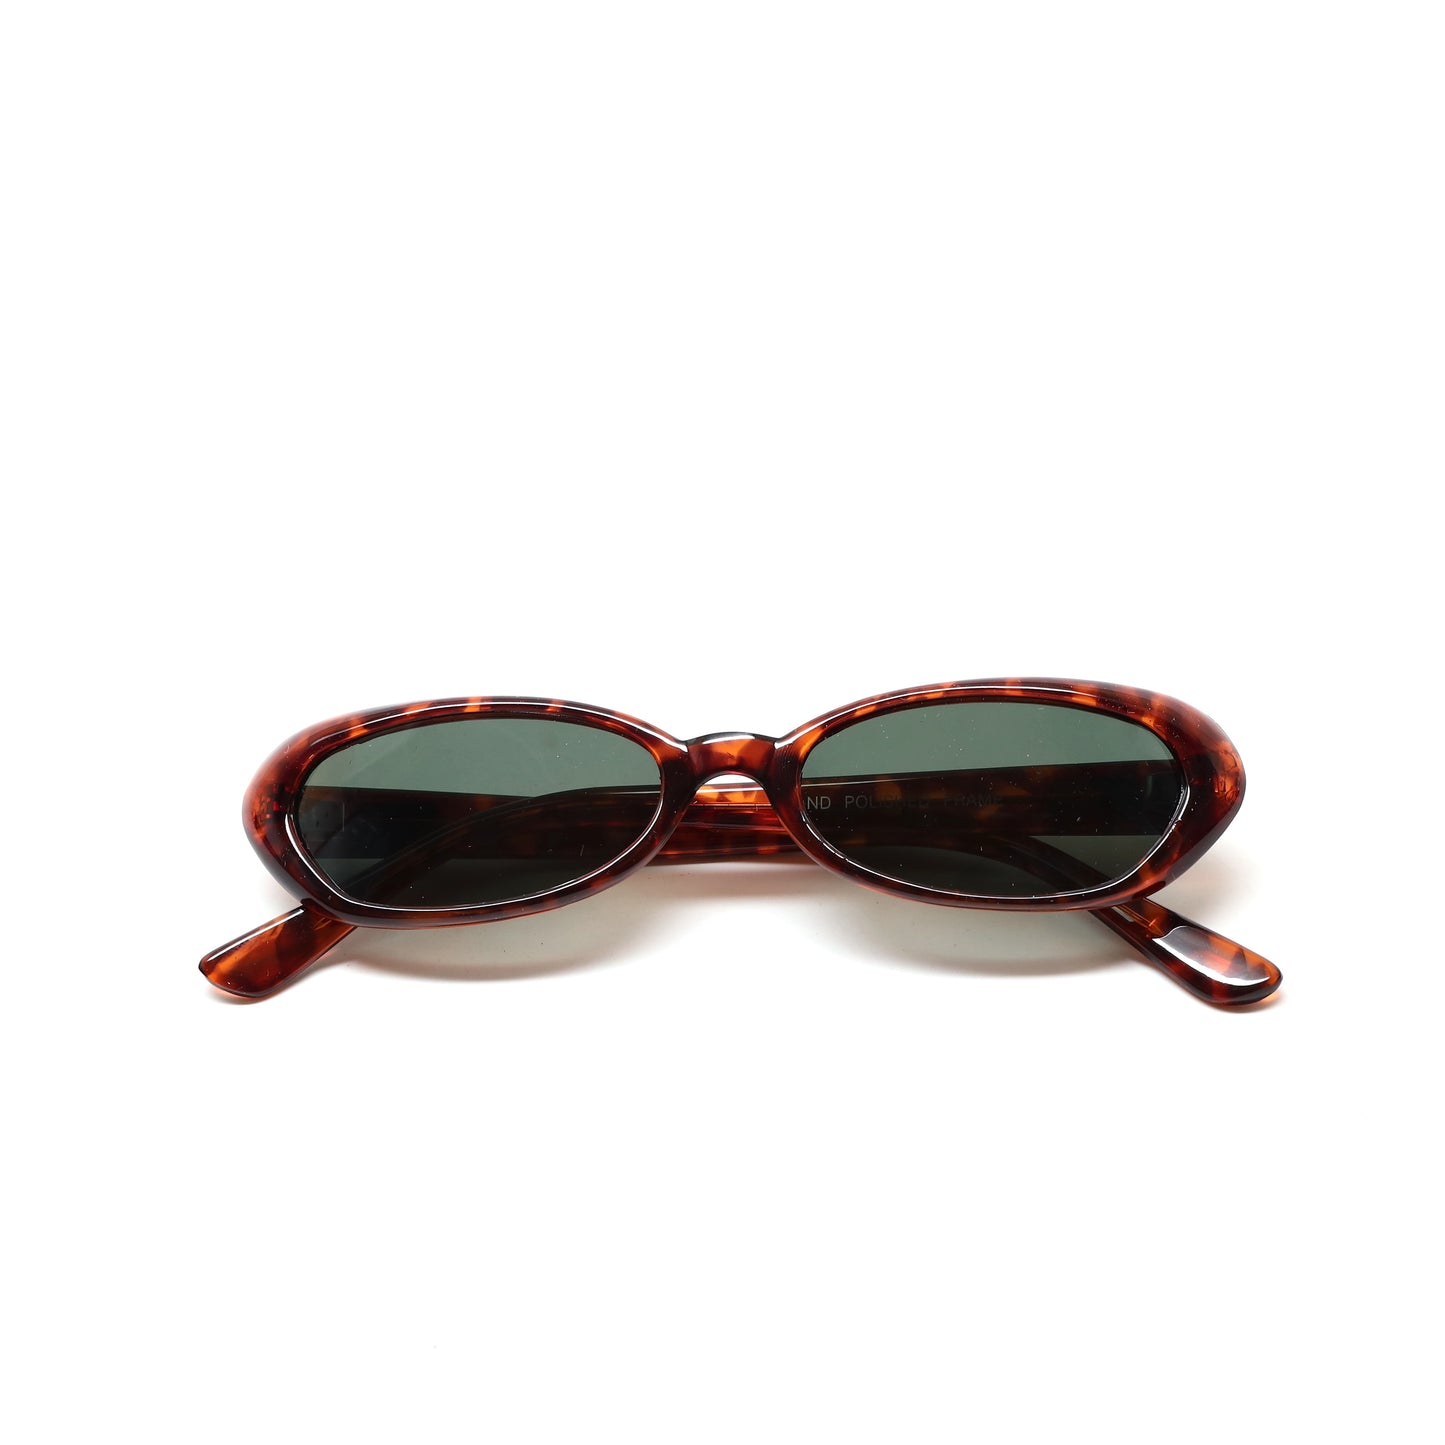 Vintage Small Sized Thin Narrow Shape Redondo Sunglasses - Tortoise